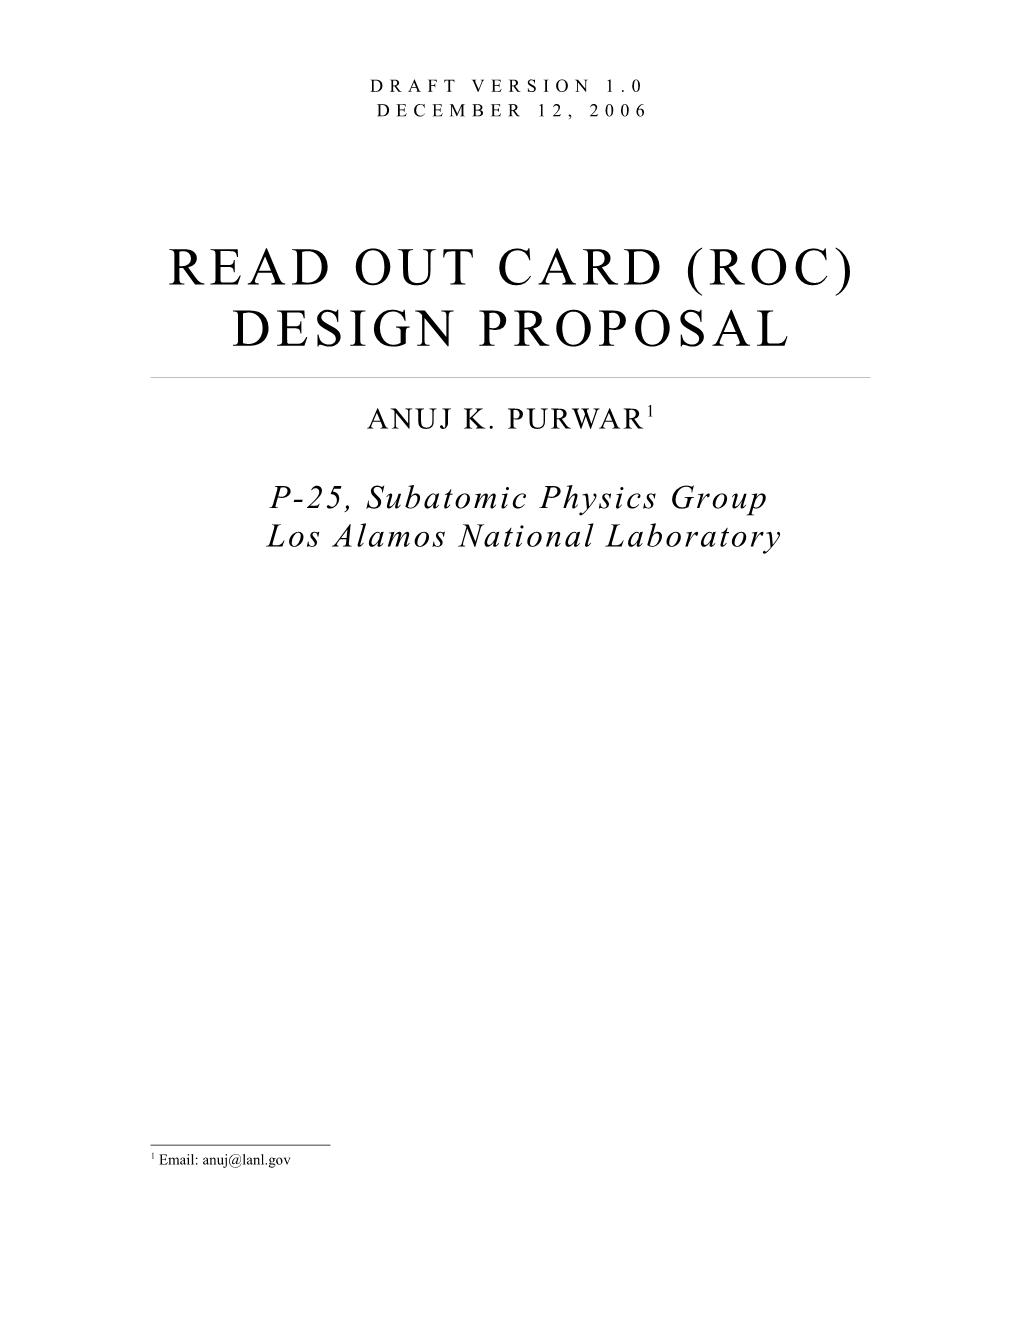 Read out Card (ROC) Design Proposal